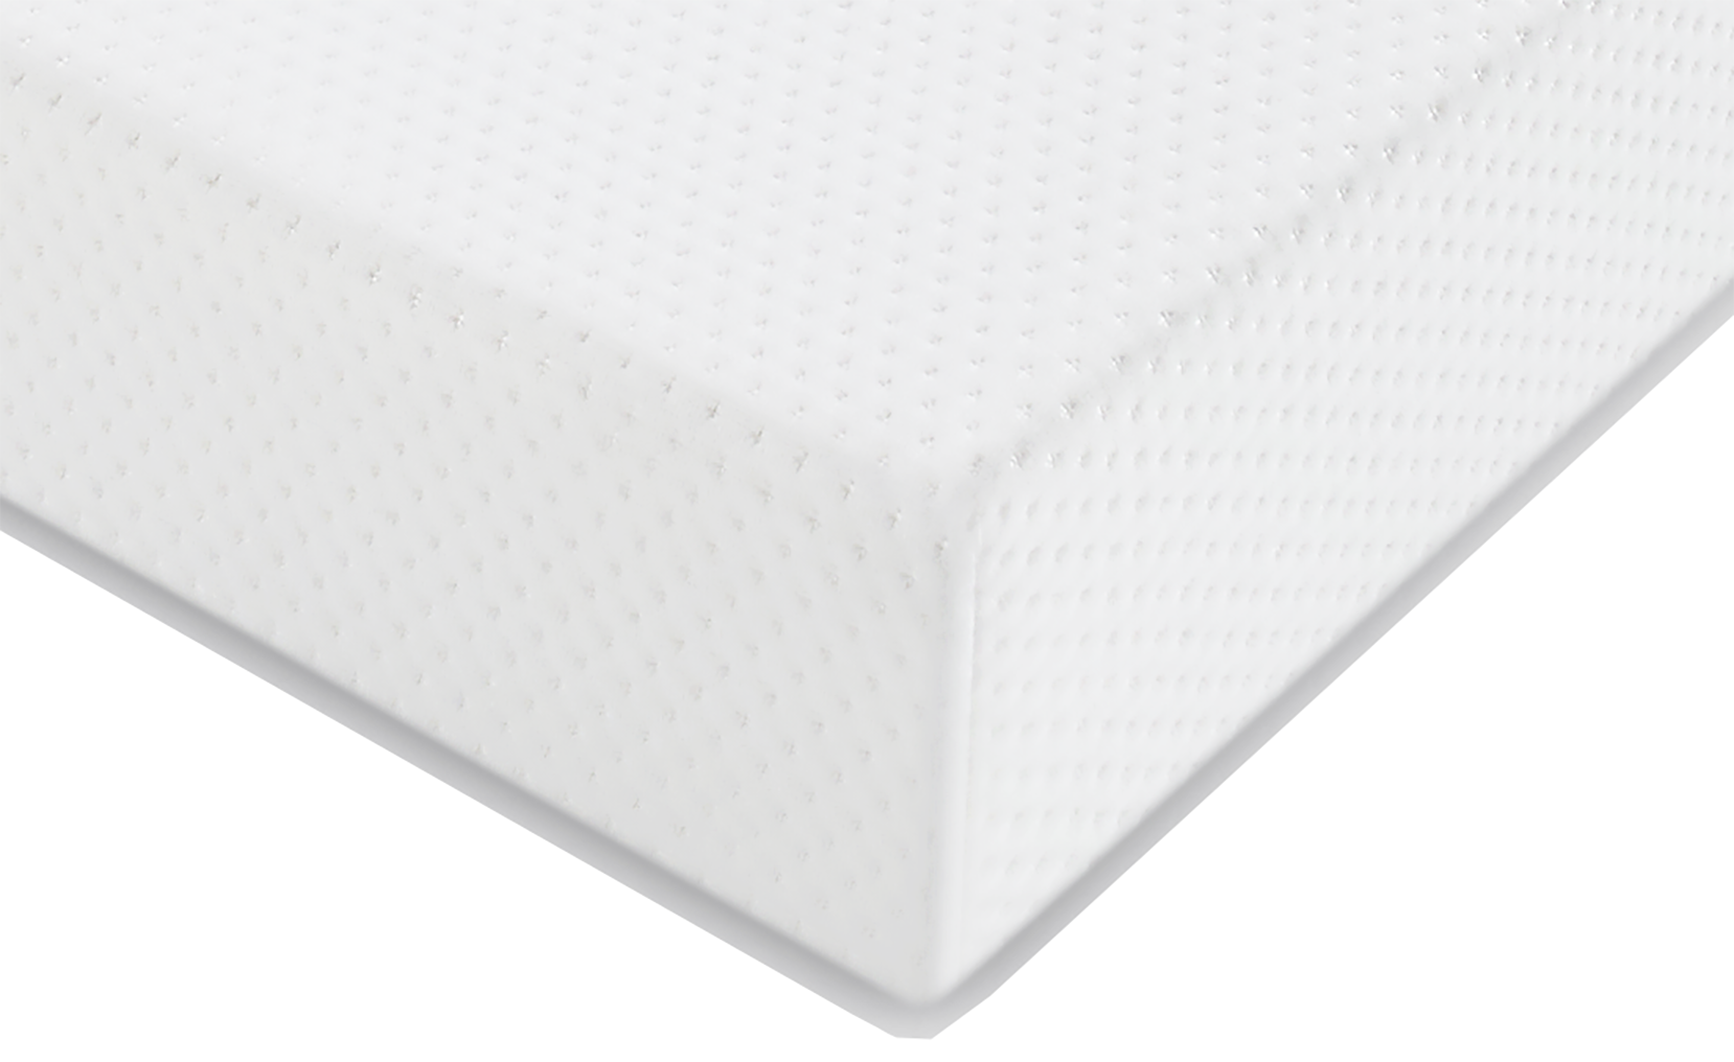 cot mattress 1320 x 770